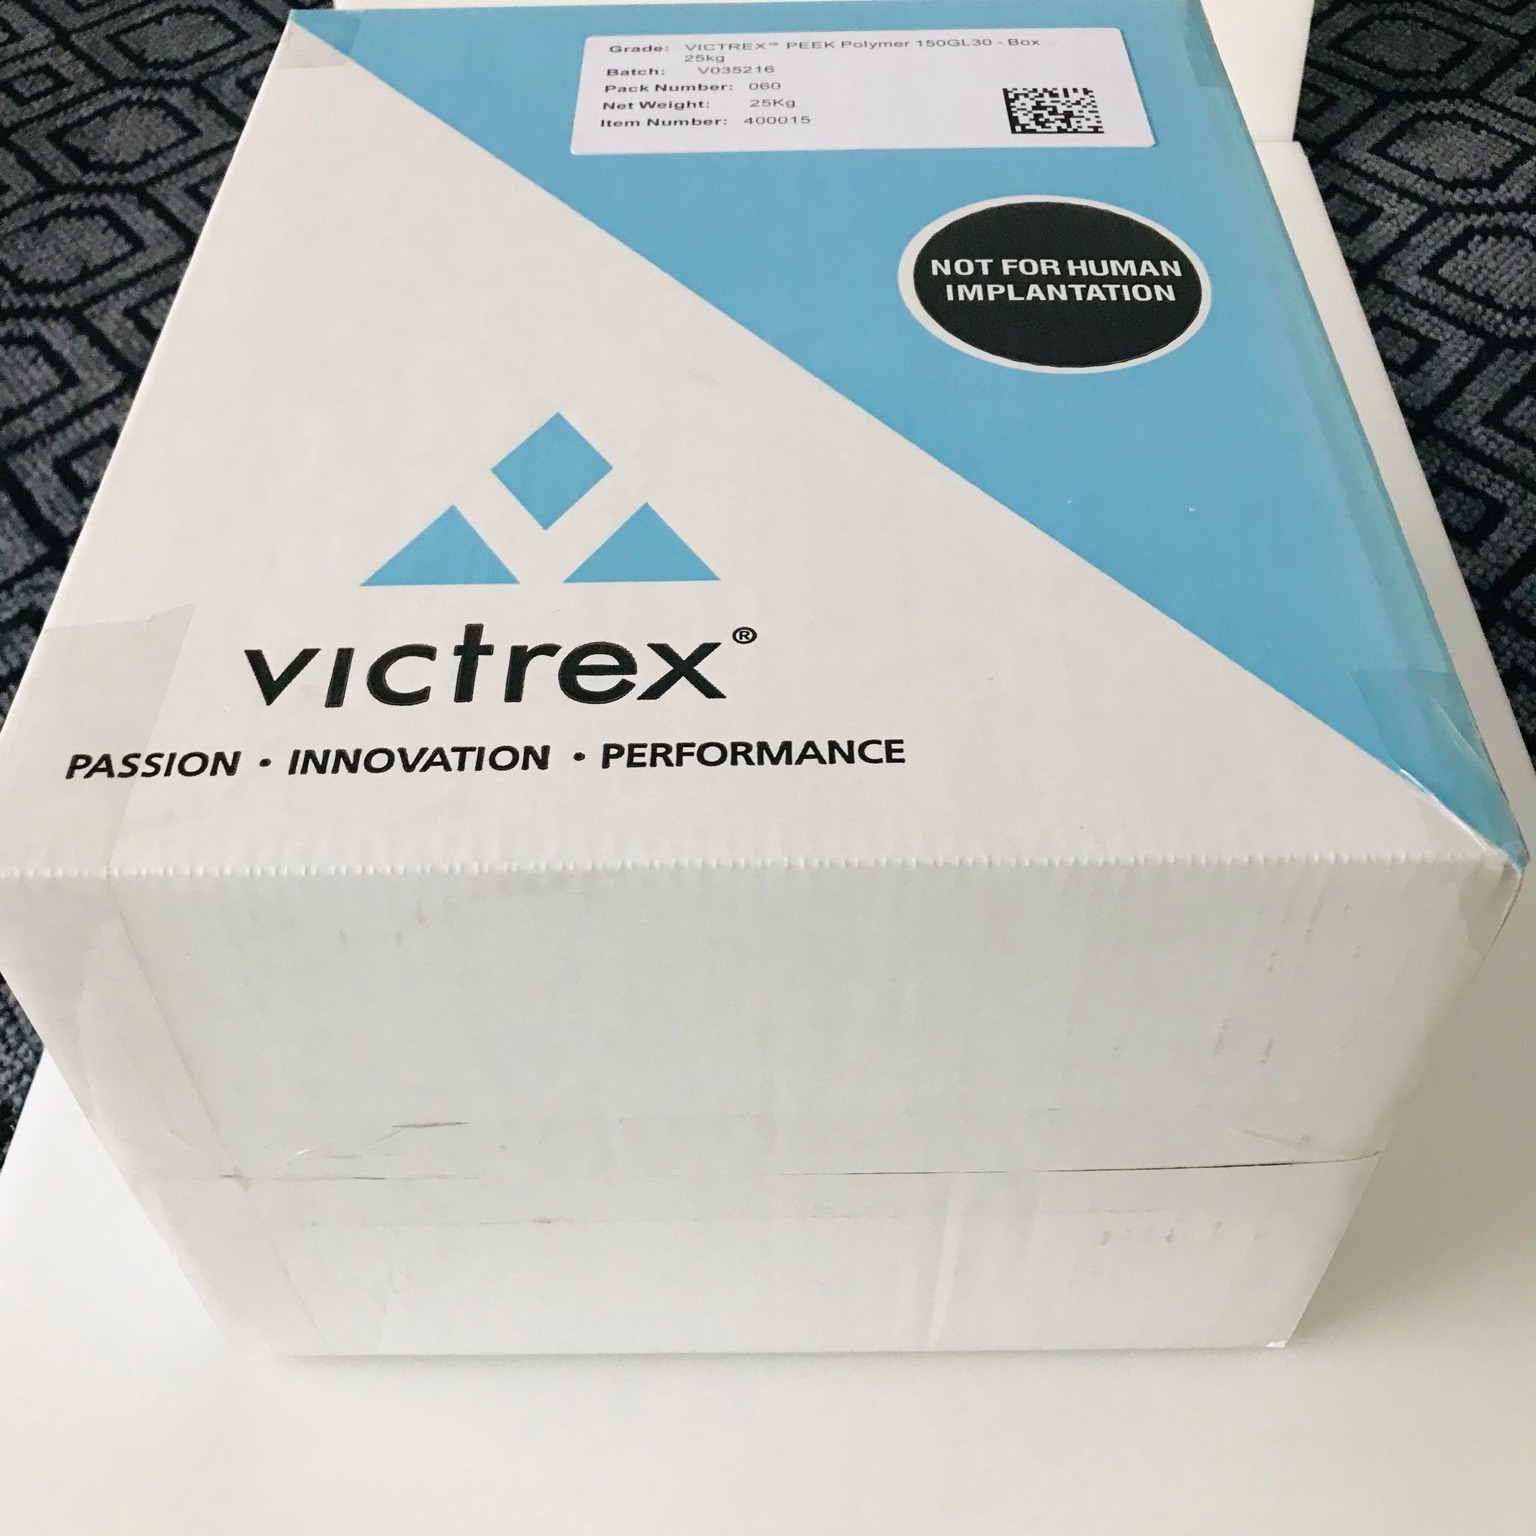 VICTREX 英国威格斯 PEEK 150GL30 易流动30%玻纤增强半结晶 低摩擦系数 医疗护理用品